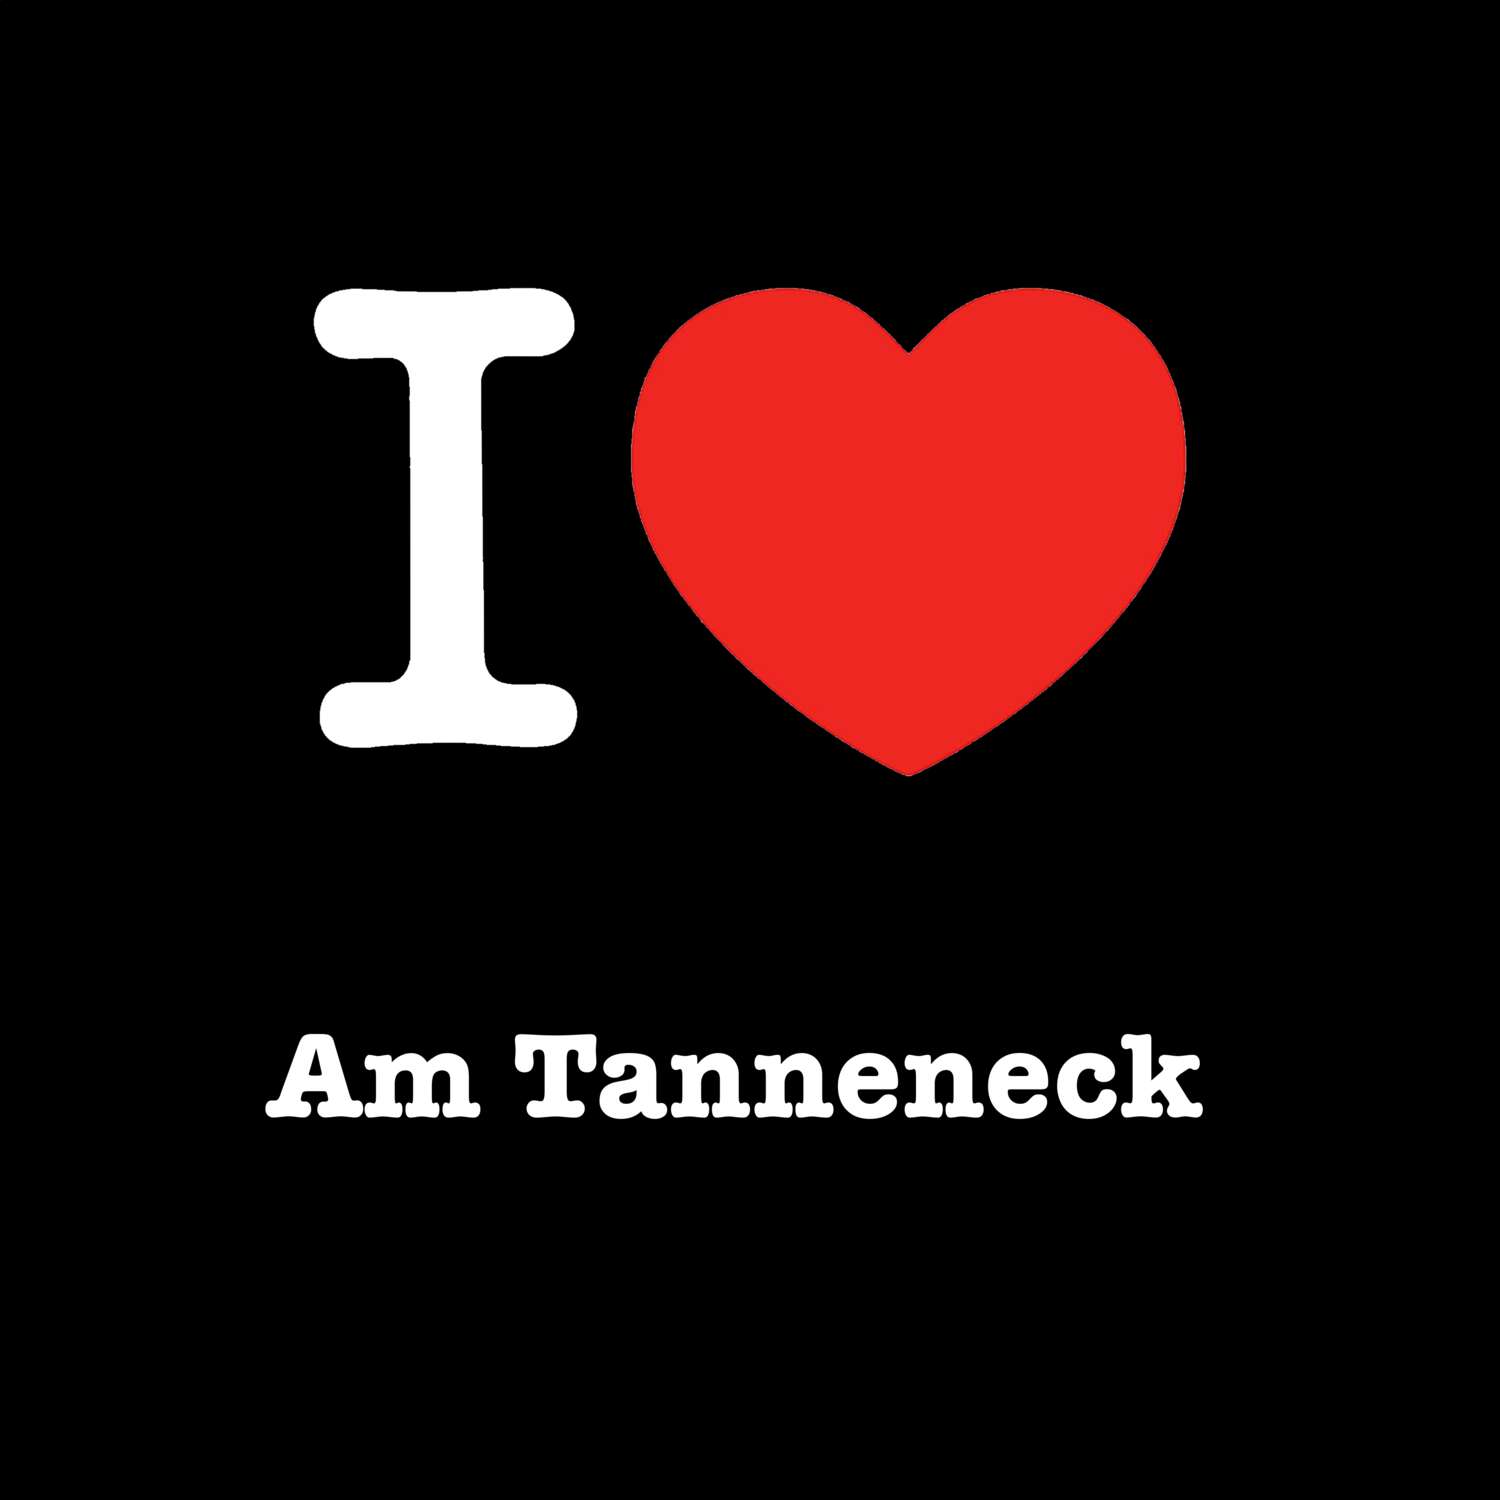 Am Tanneneck T-Shirt »I love«